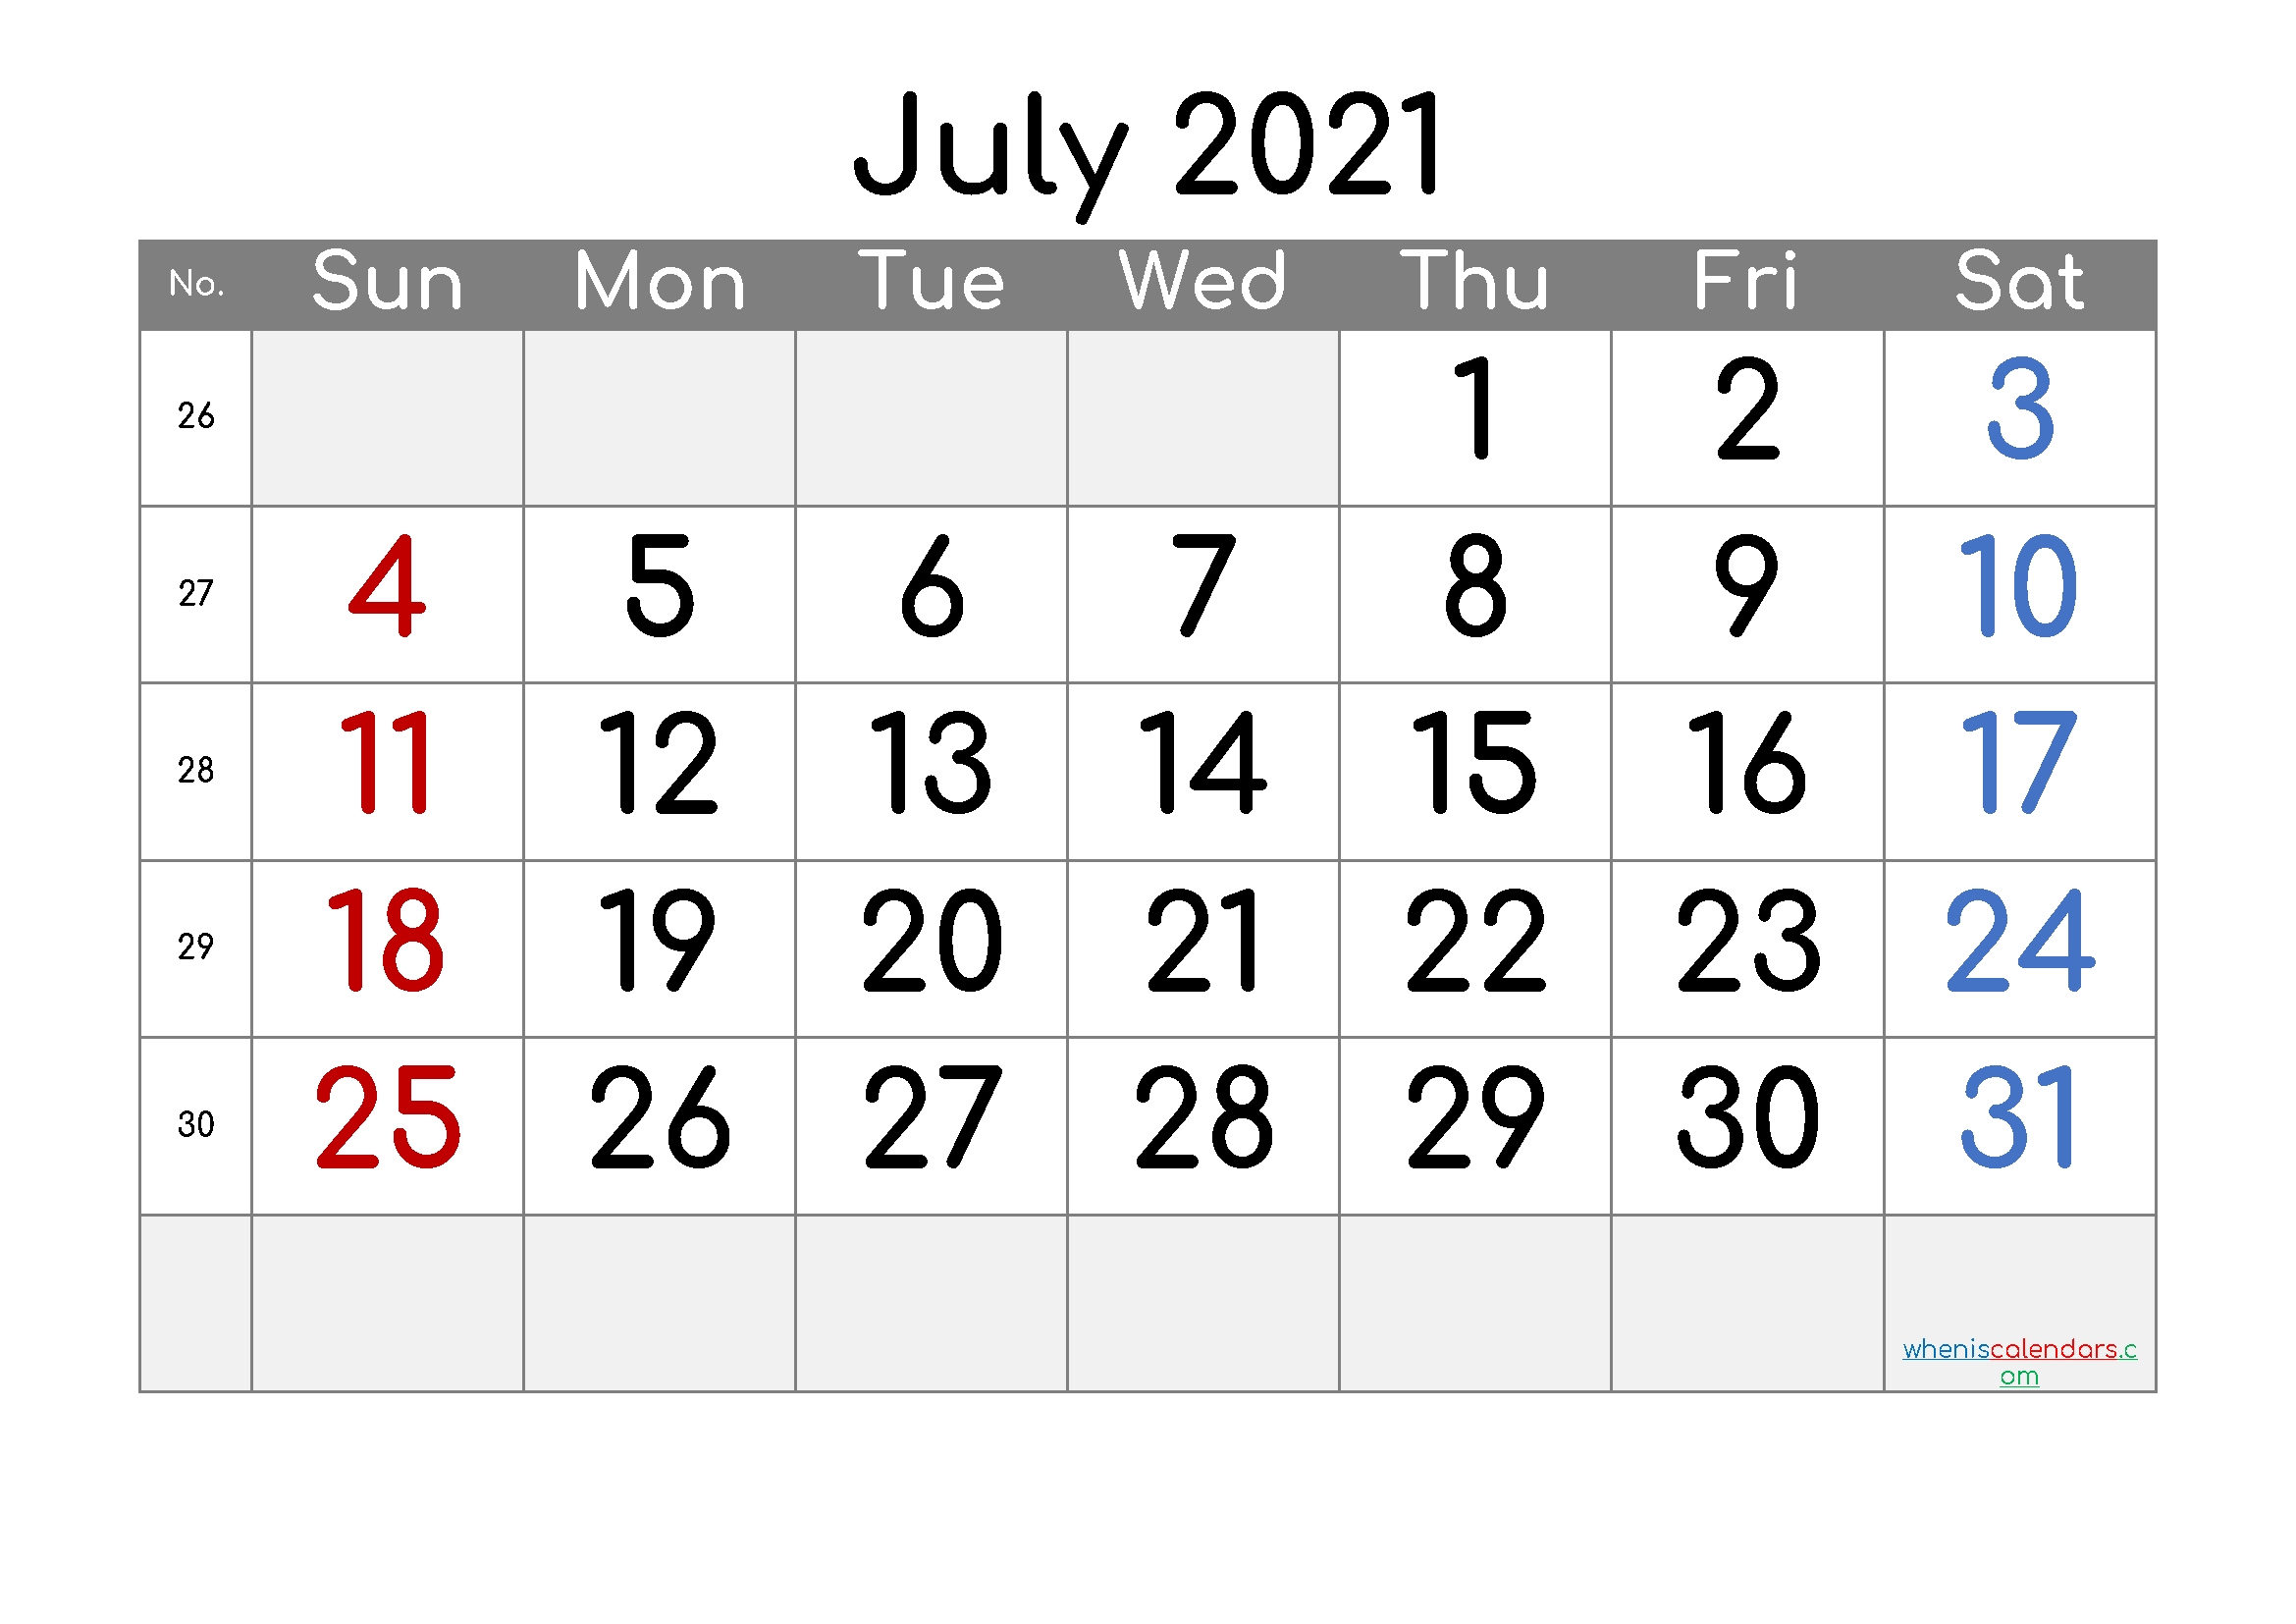 Free Printable July 2021 Calendar Online Calendar July 2021